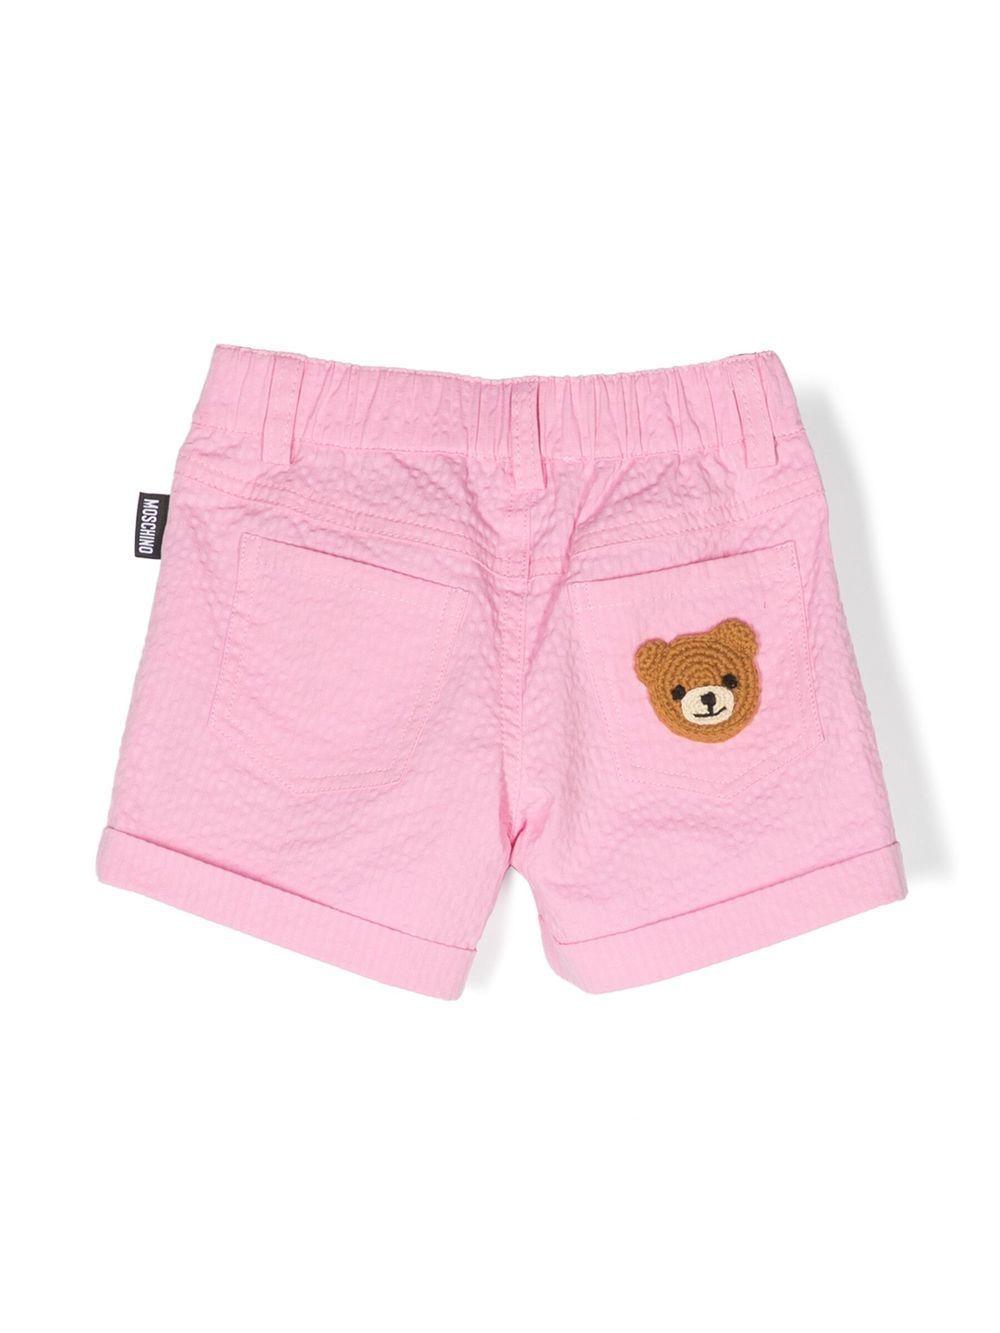 Teddy bear shorts